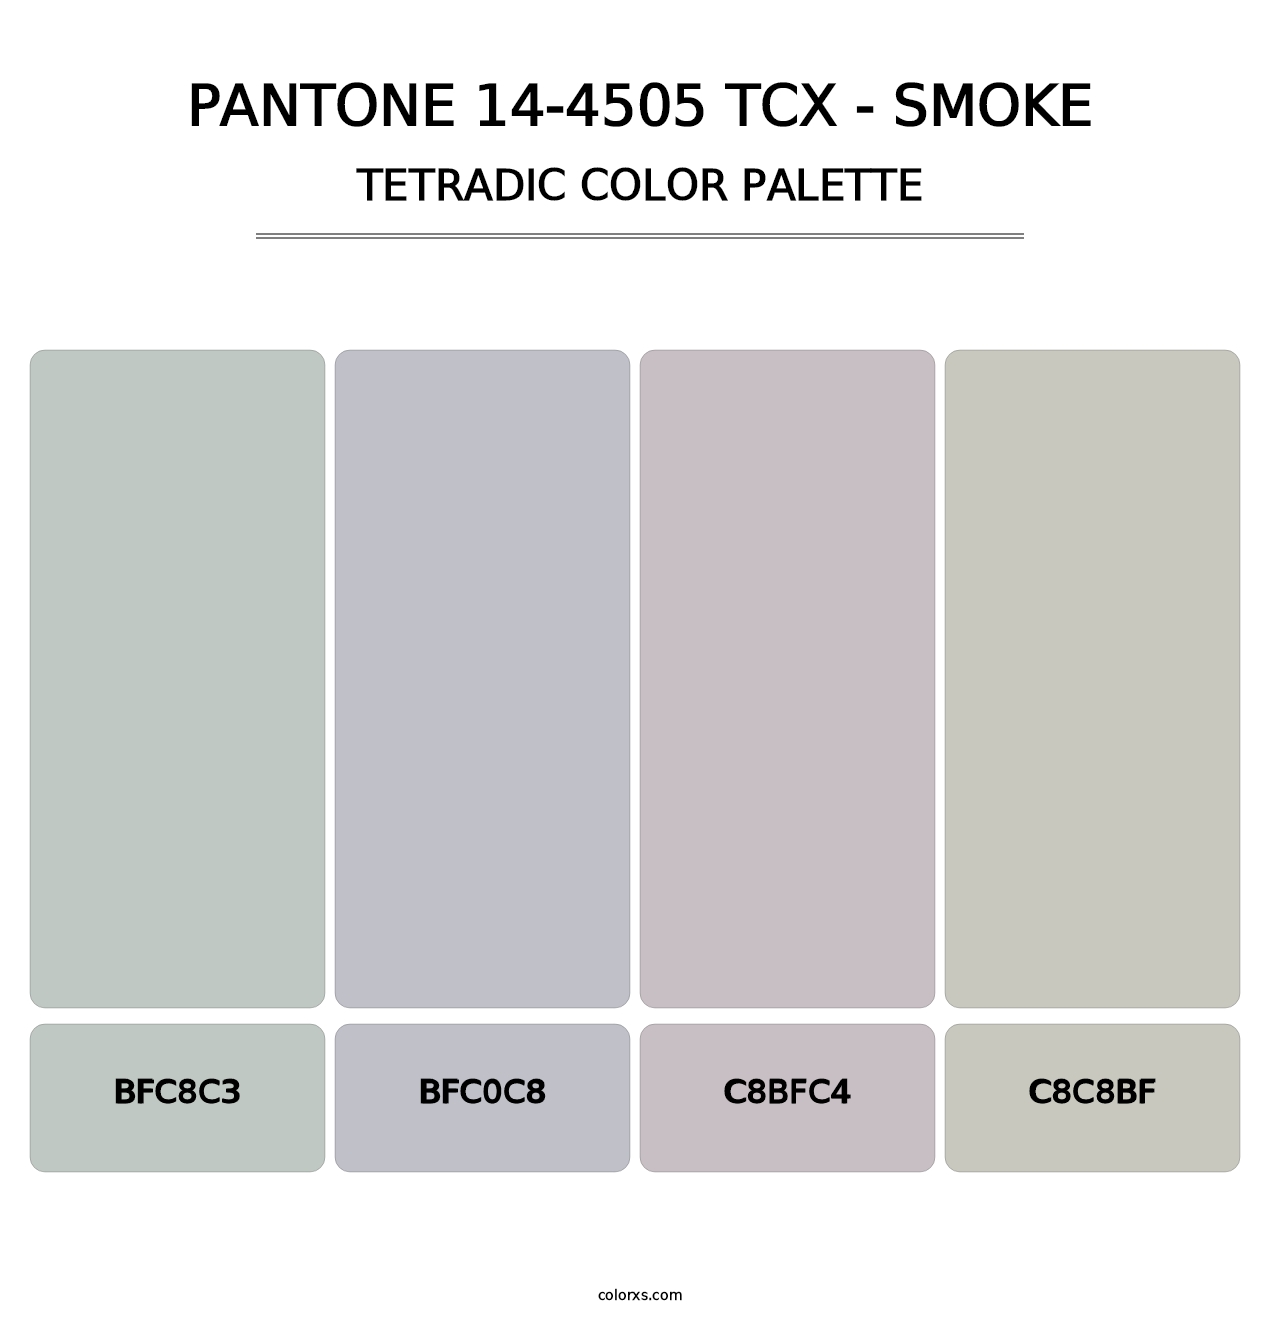 PANTONE 14-4505 TCX - Smoke - Tetradic Color Palette